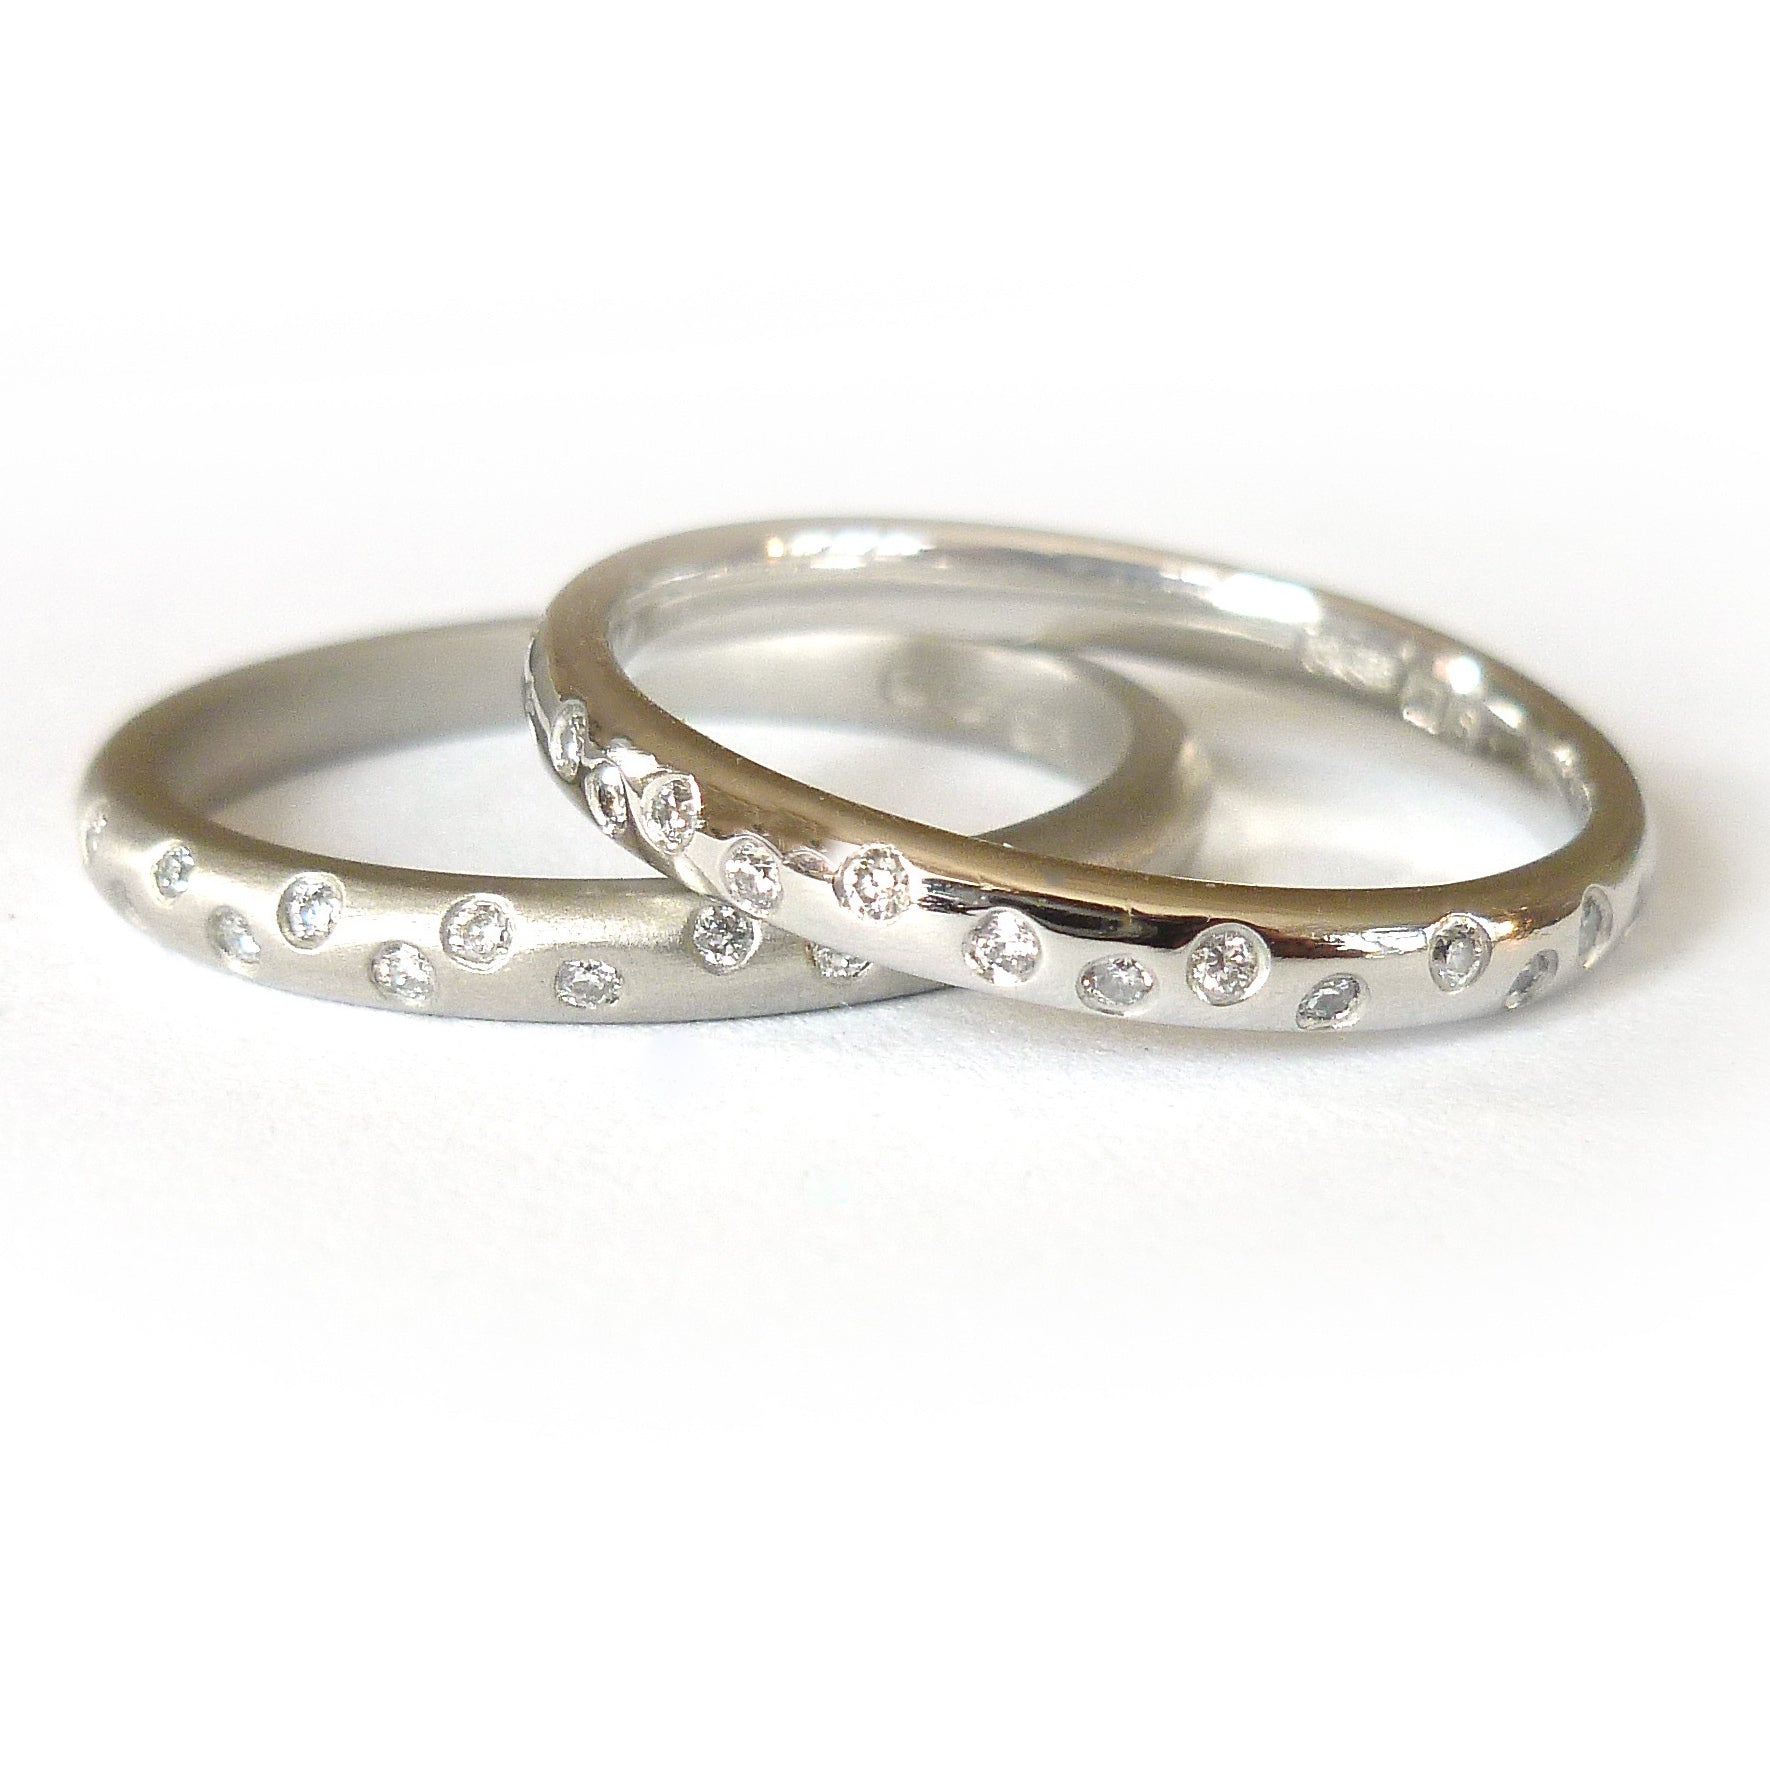 Platinum and diamond engagement, wedding or eternity ring